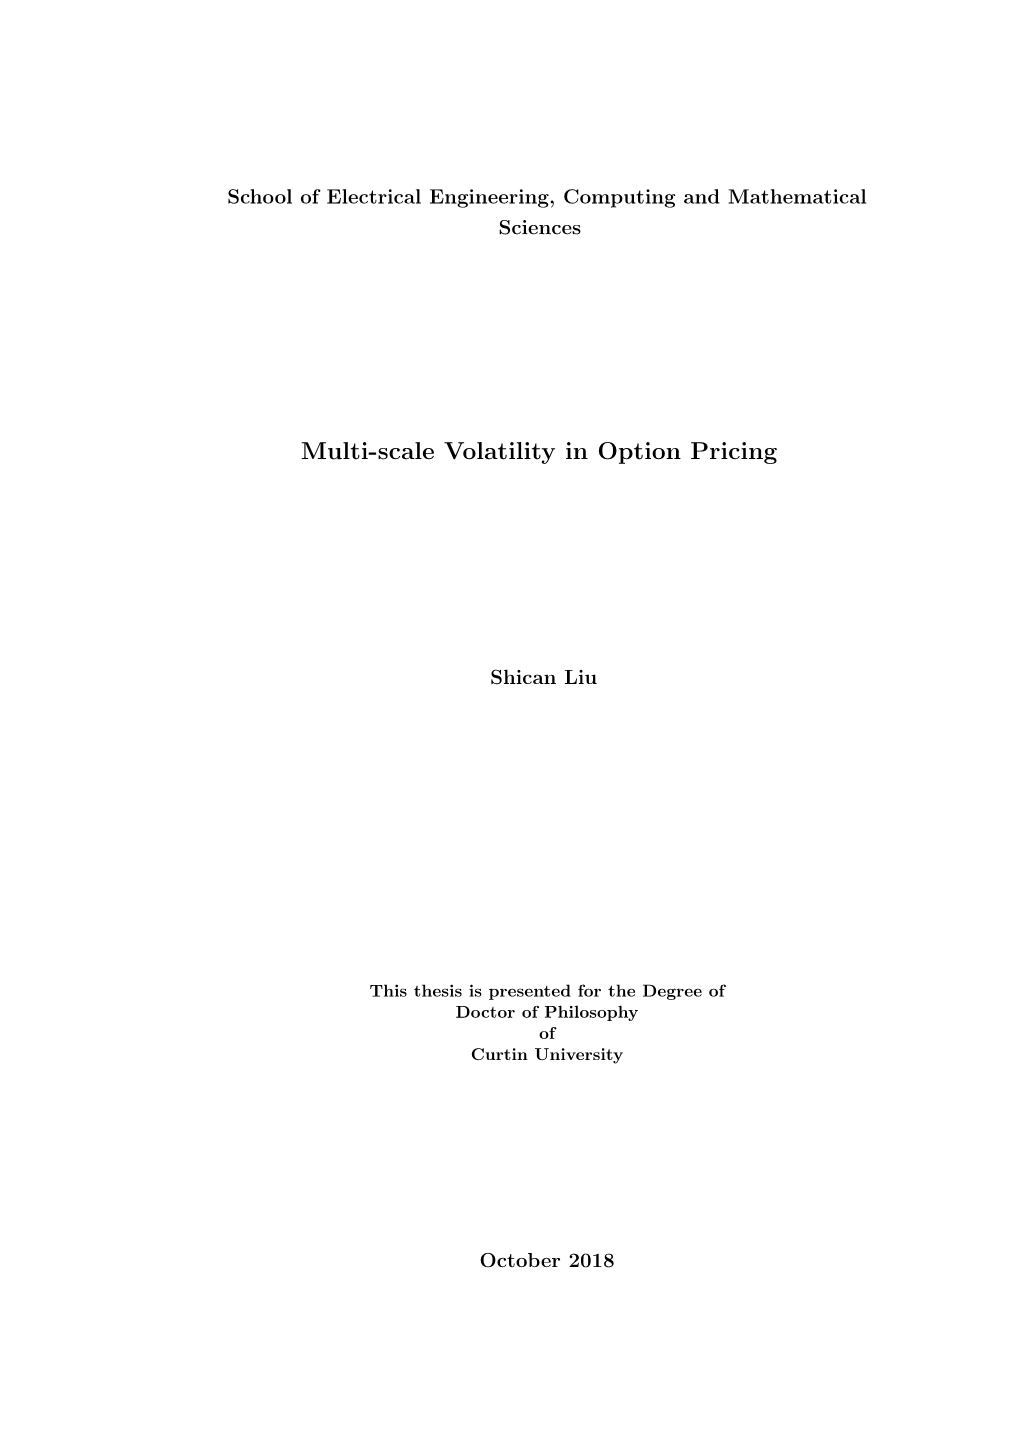 Multi-Scale Volatility in Option Pricing